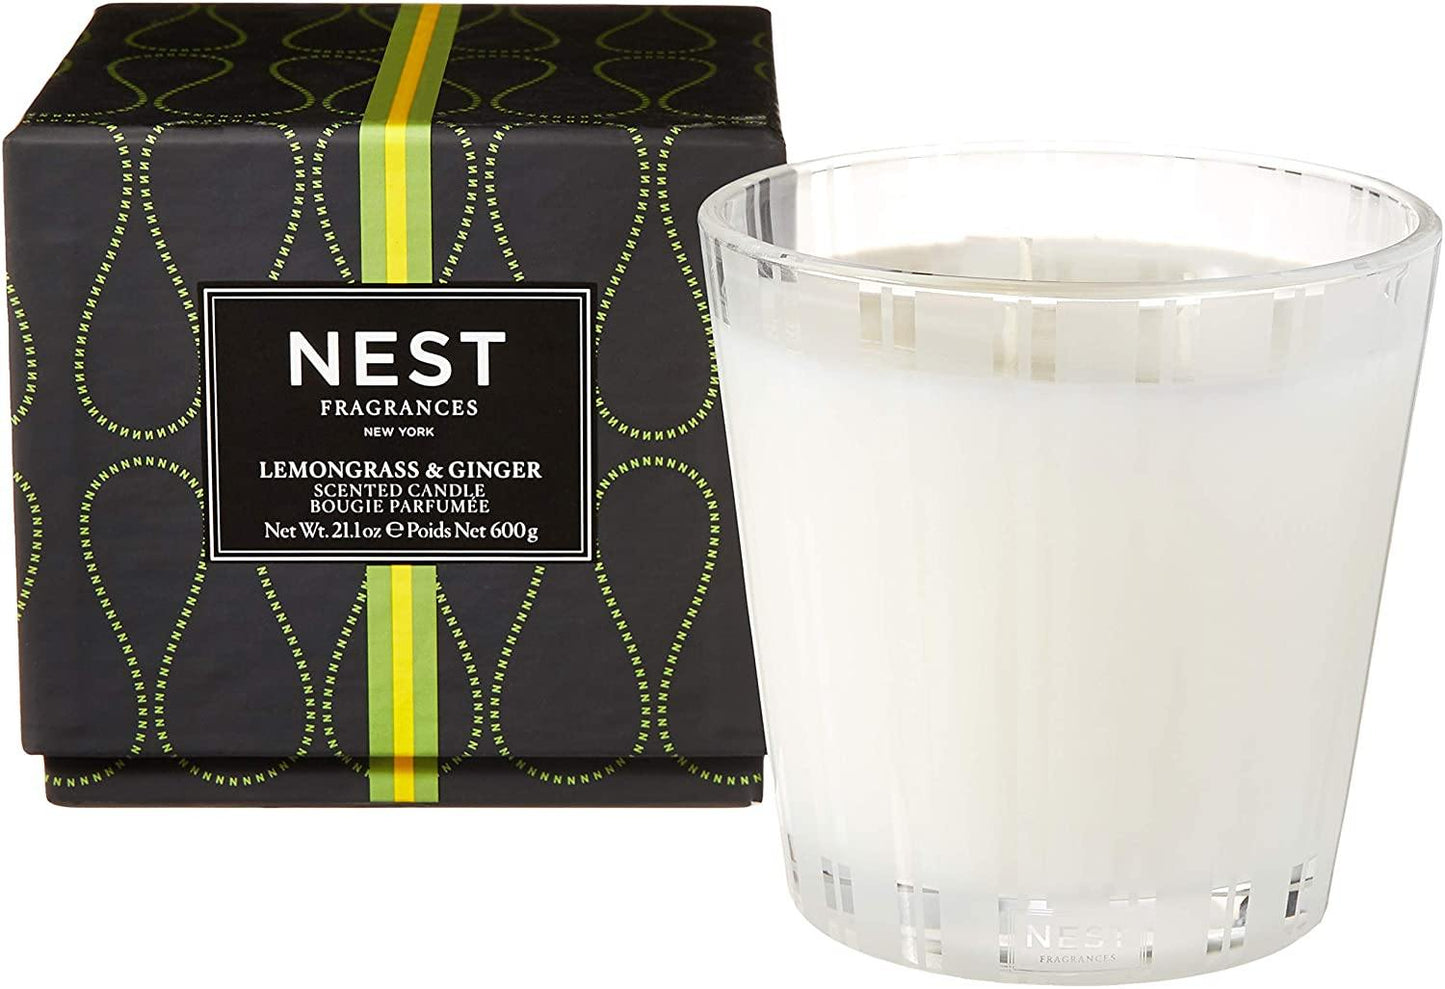 Nest Fragrances Lemongrass & Ginger Candle - ScentGiant